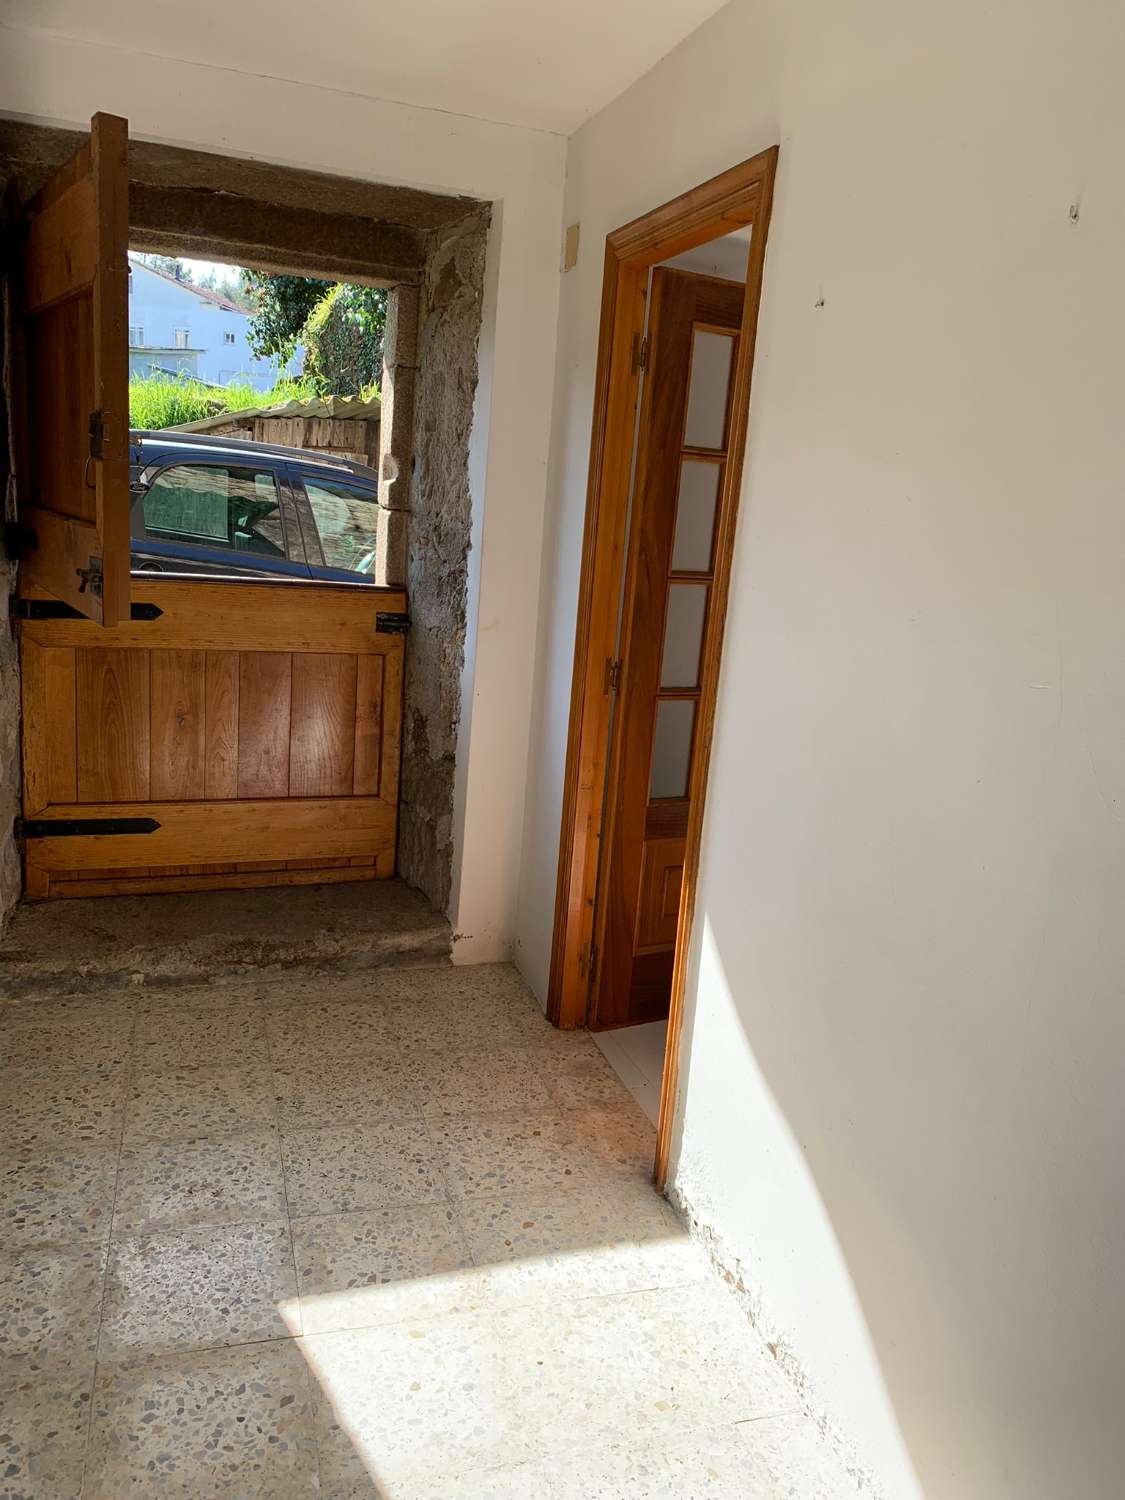 House for sale in Monfero